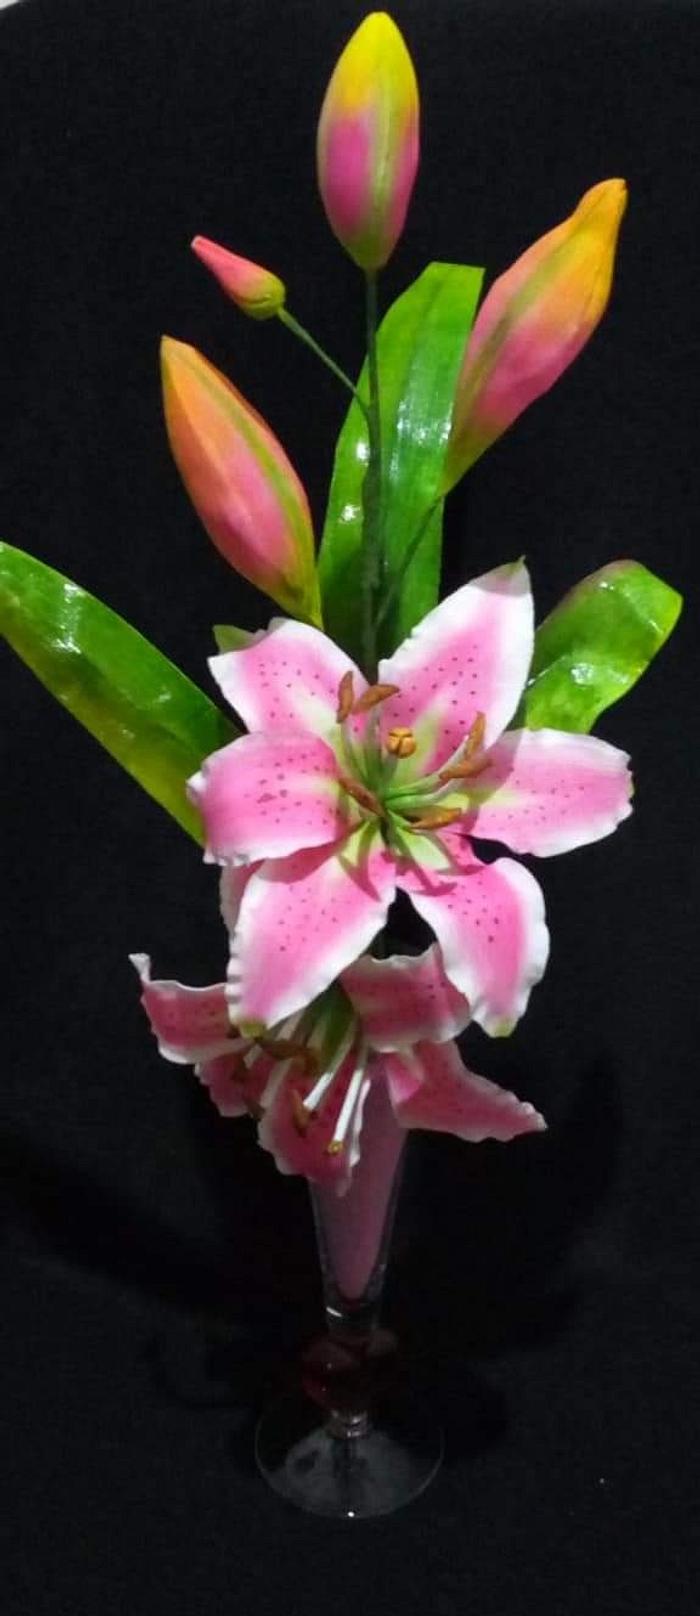 Lily gum paste flower